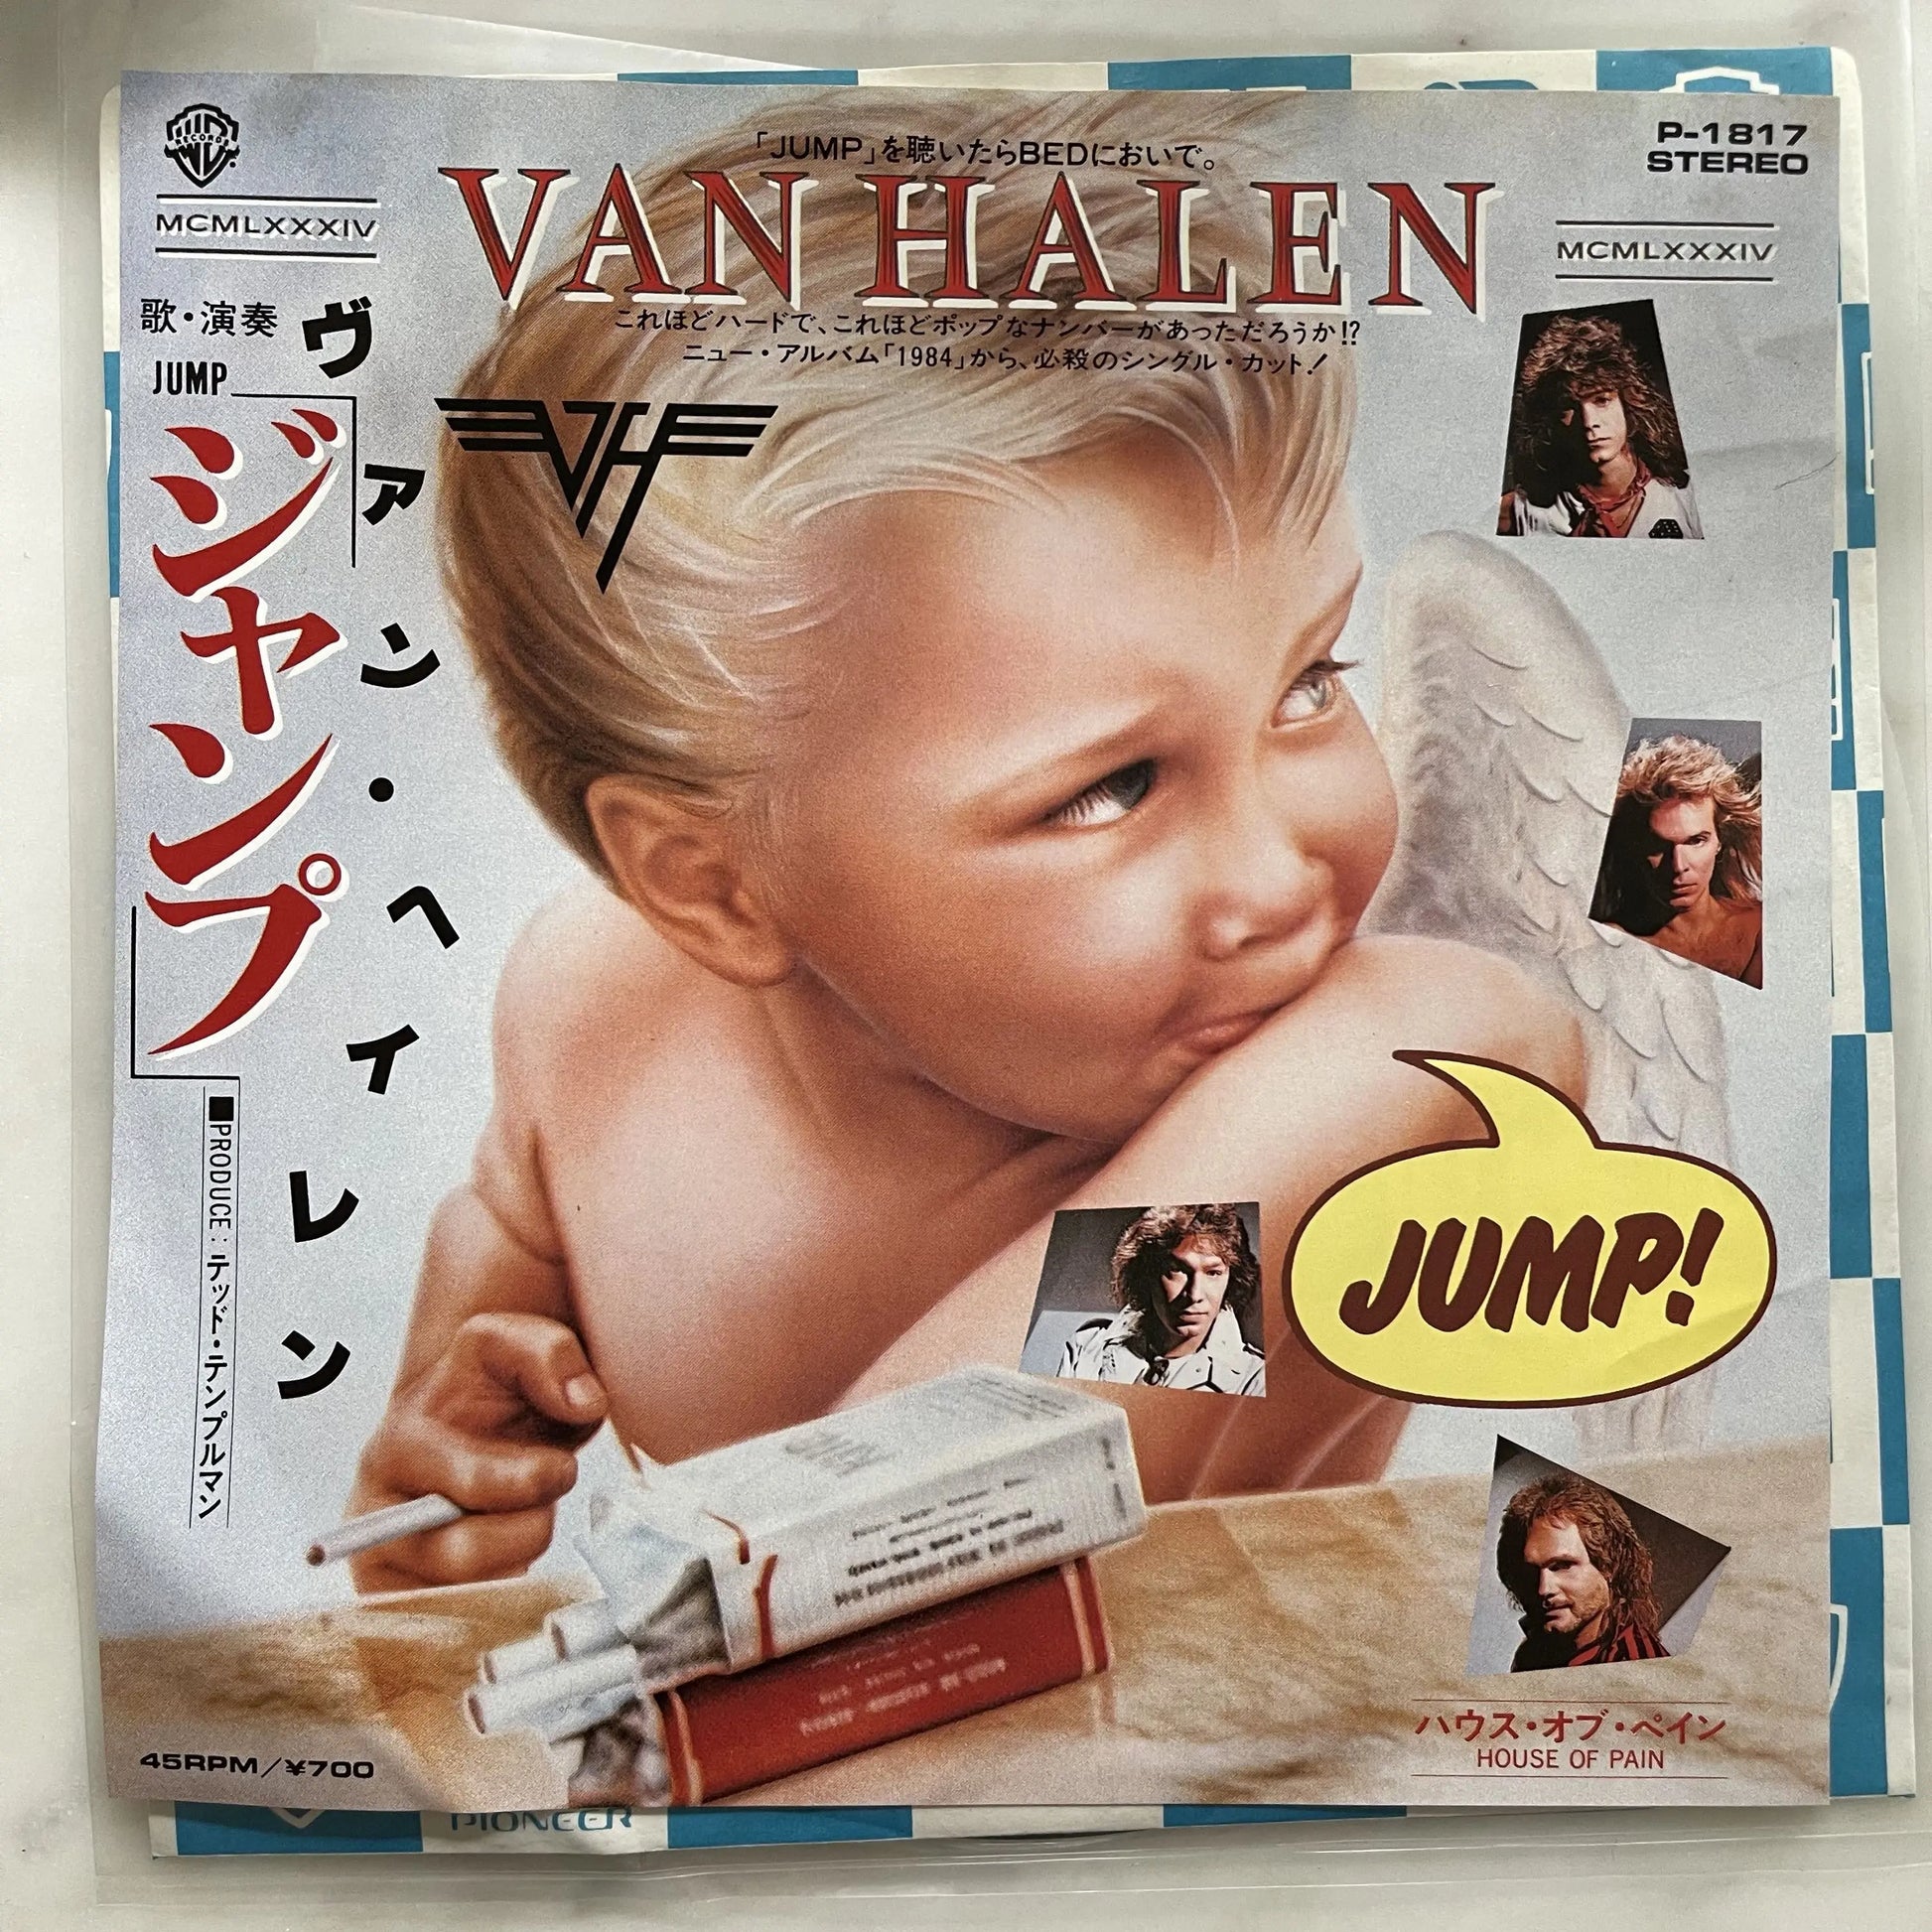 Van Halen - Jump [Japanese 45 rpm 7" Single Vinyl]